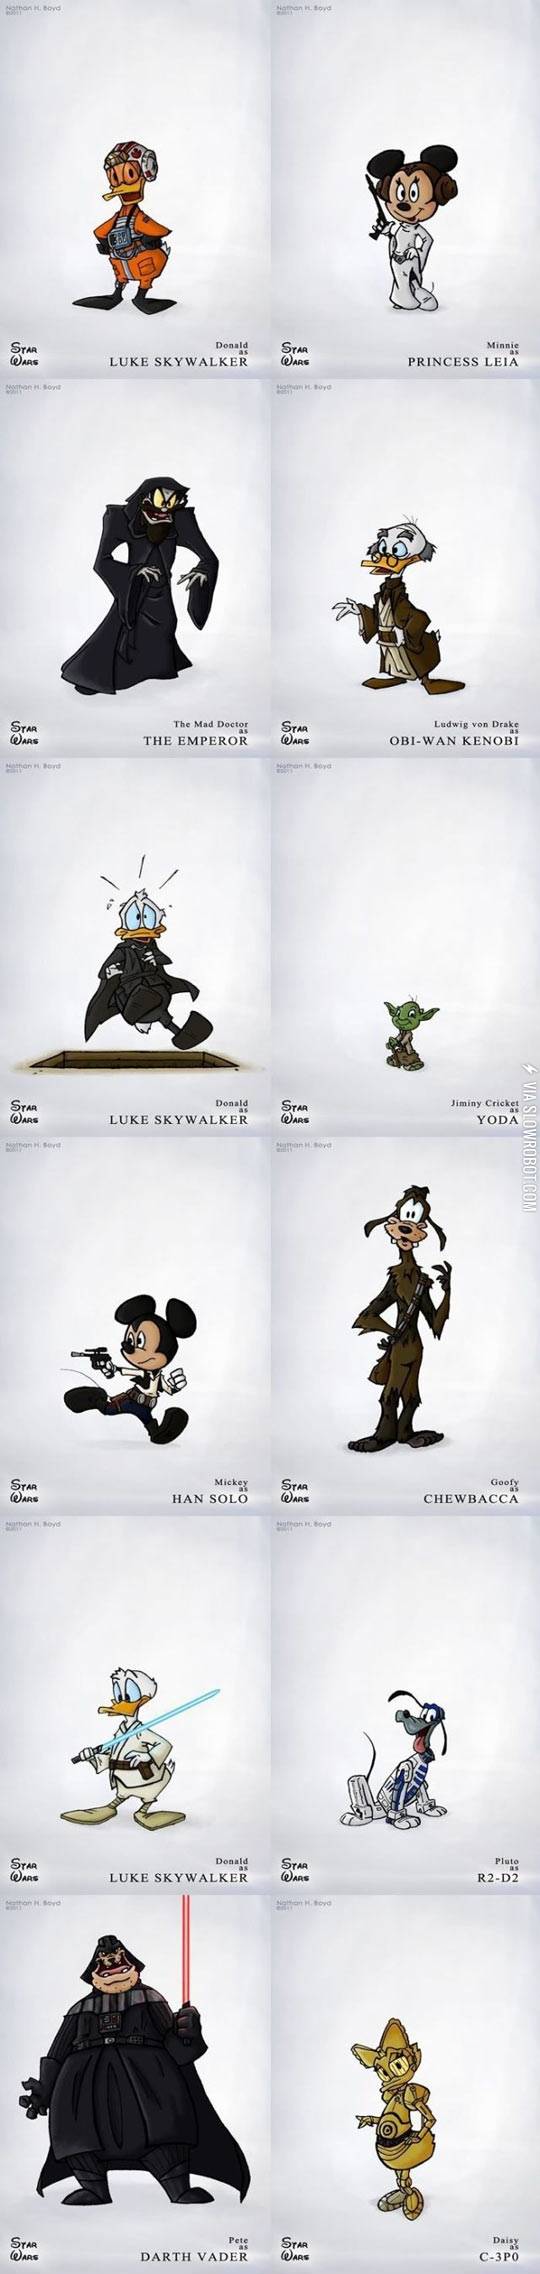 Star+Wars+as+Disney+characters.